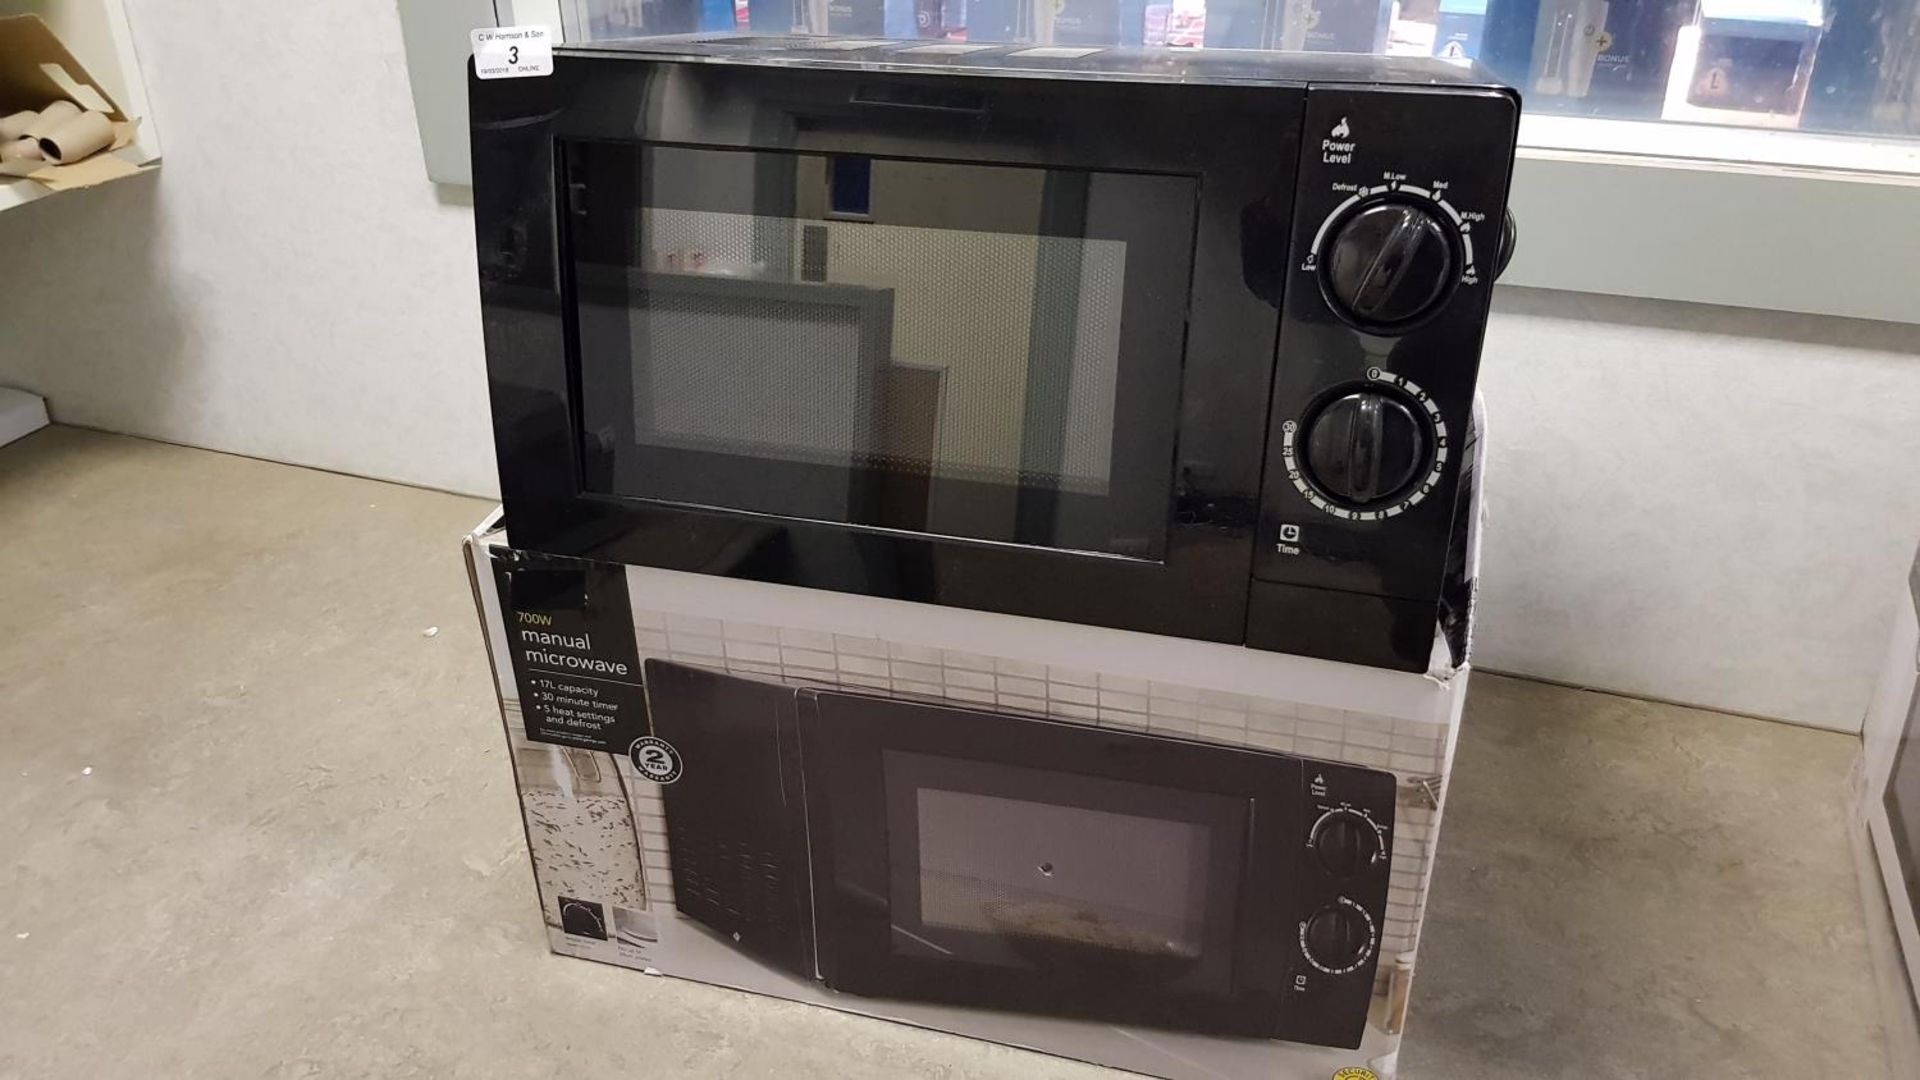 17L 700W Manual Microwave - Black